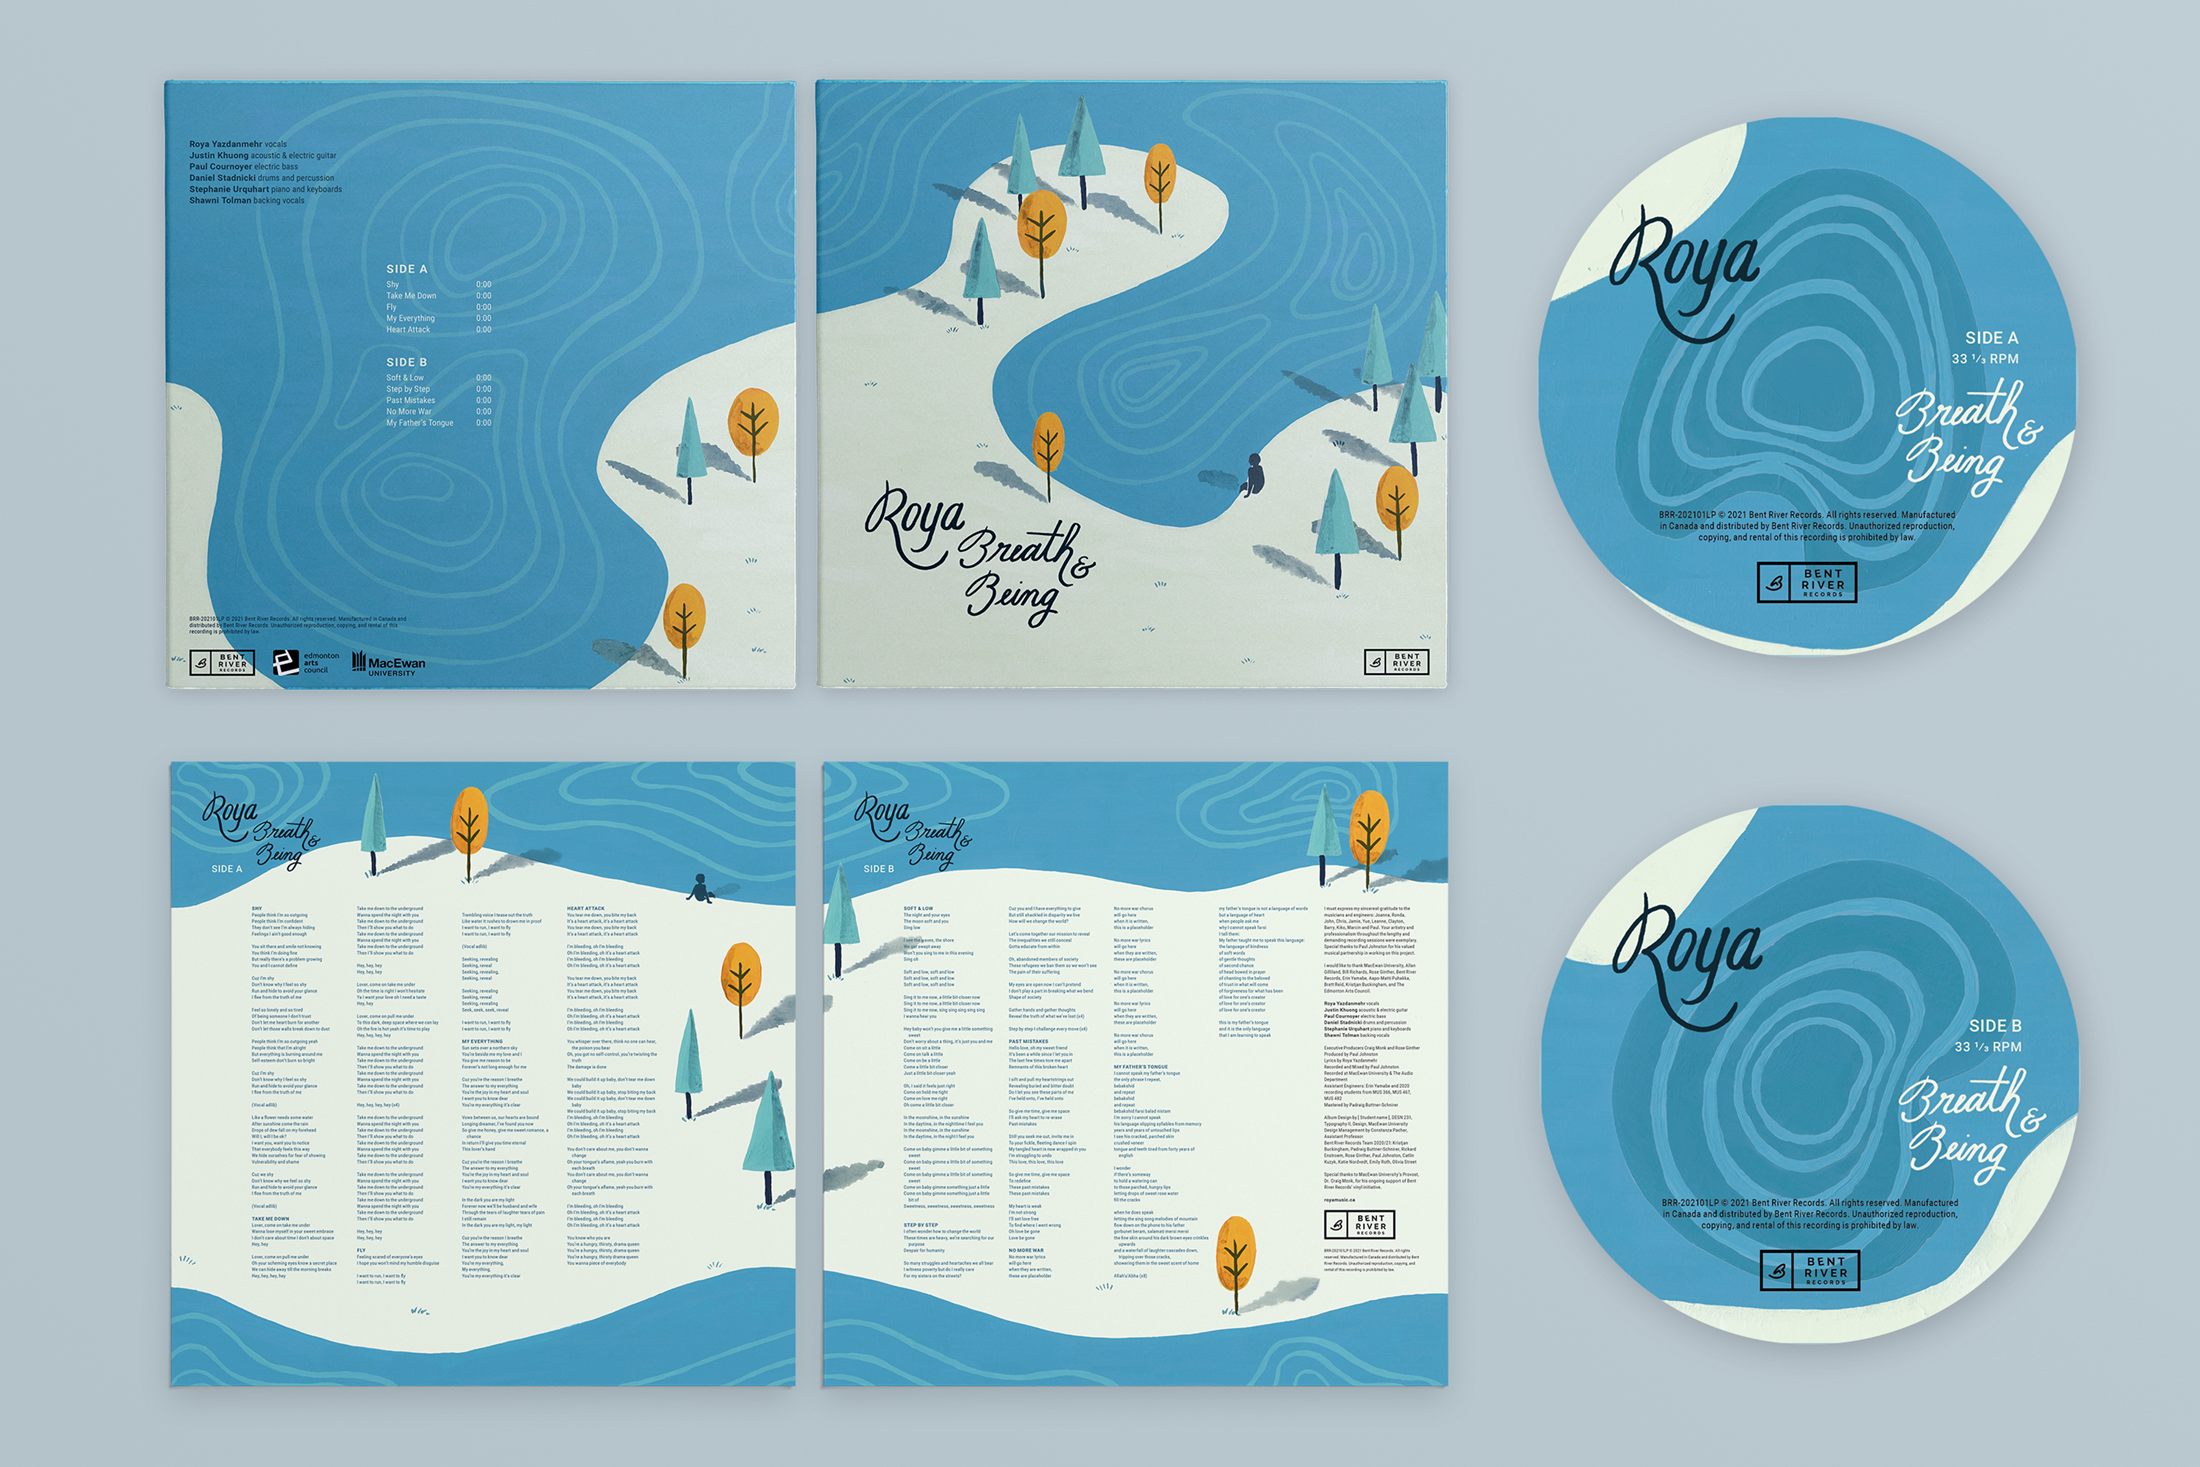 Vinyl Record Design: Roya's Breath & Being 4